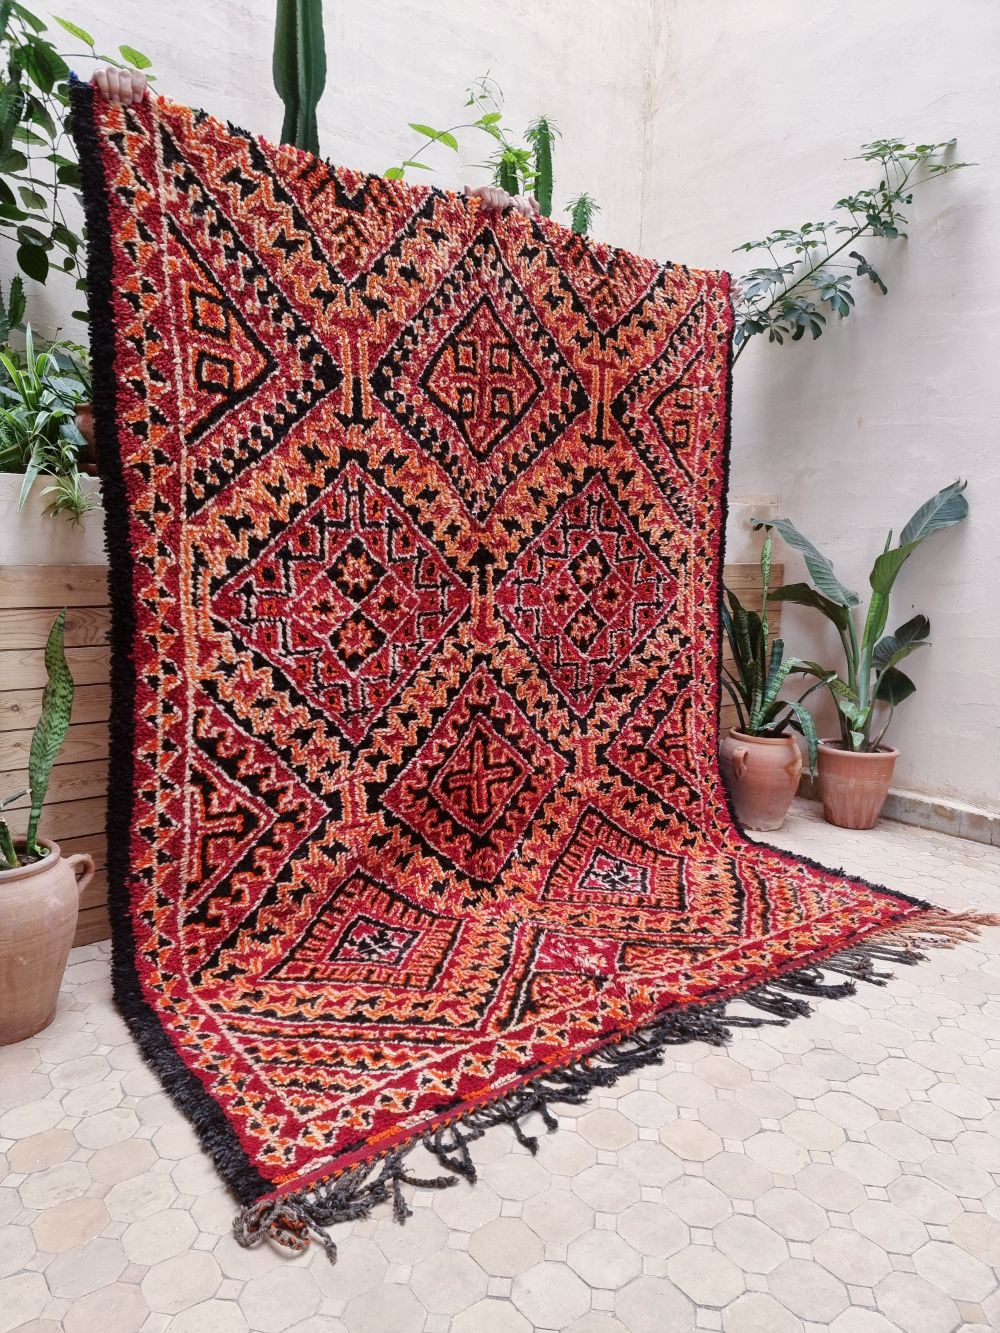 Moroccan Vintage Beni M'Guild Rug 245x190cm